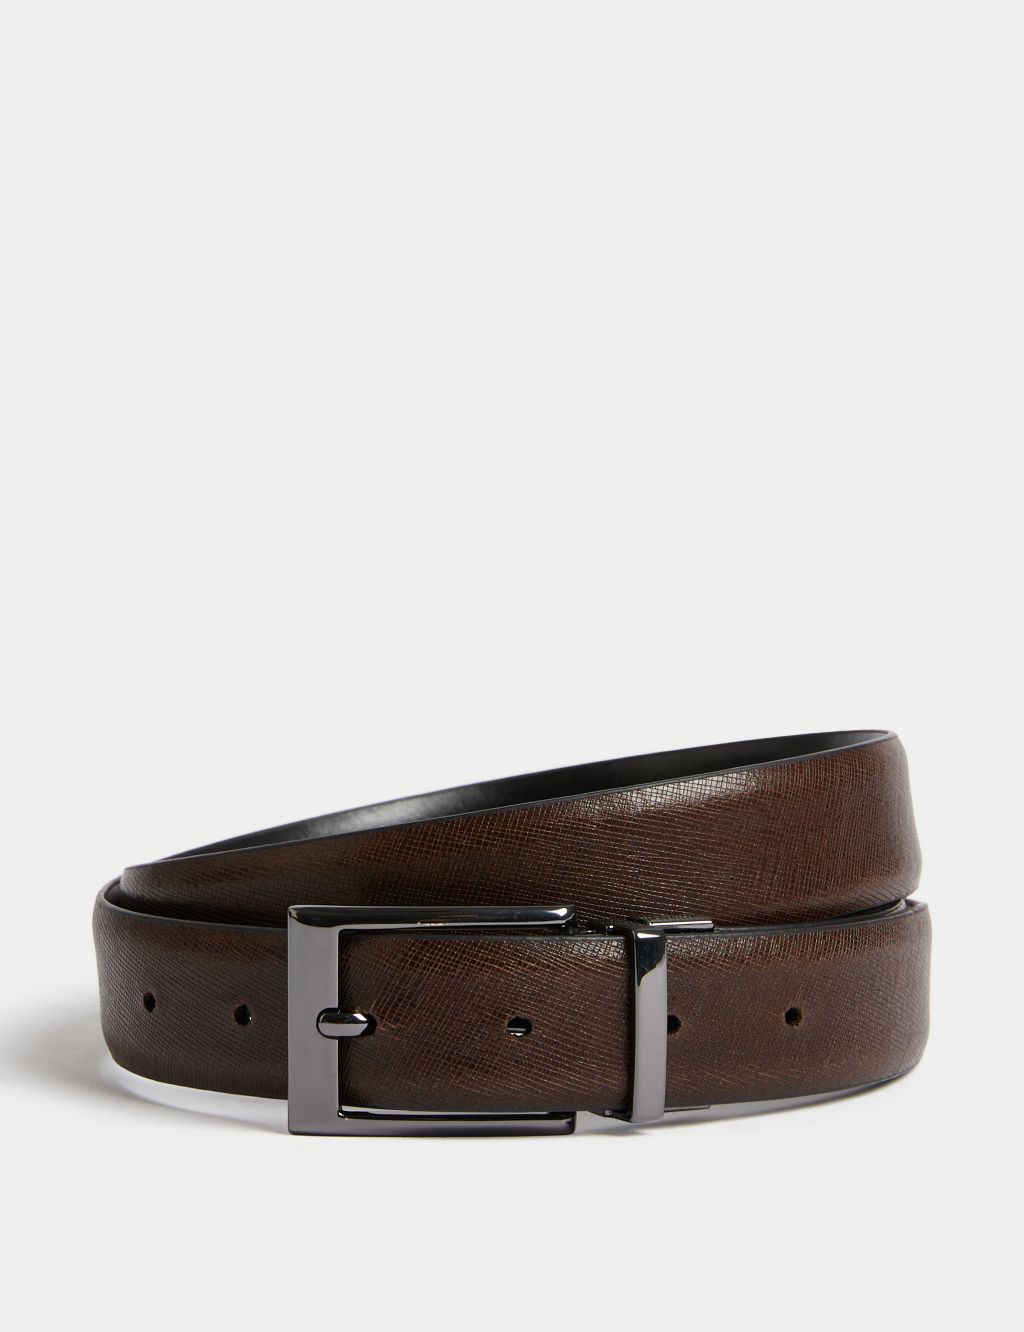 Leather Reversible Belt image 2